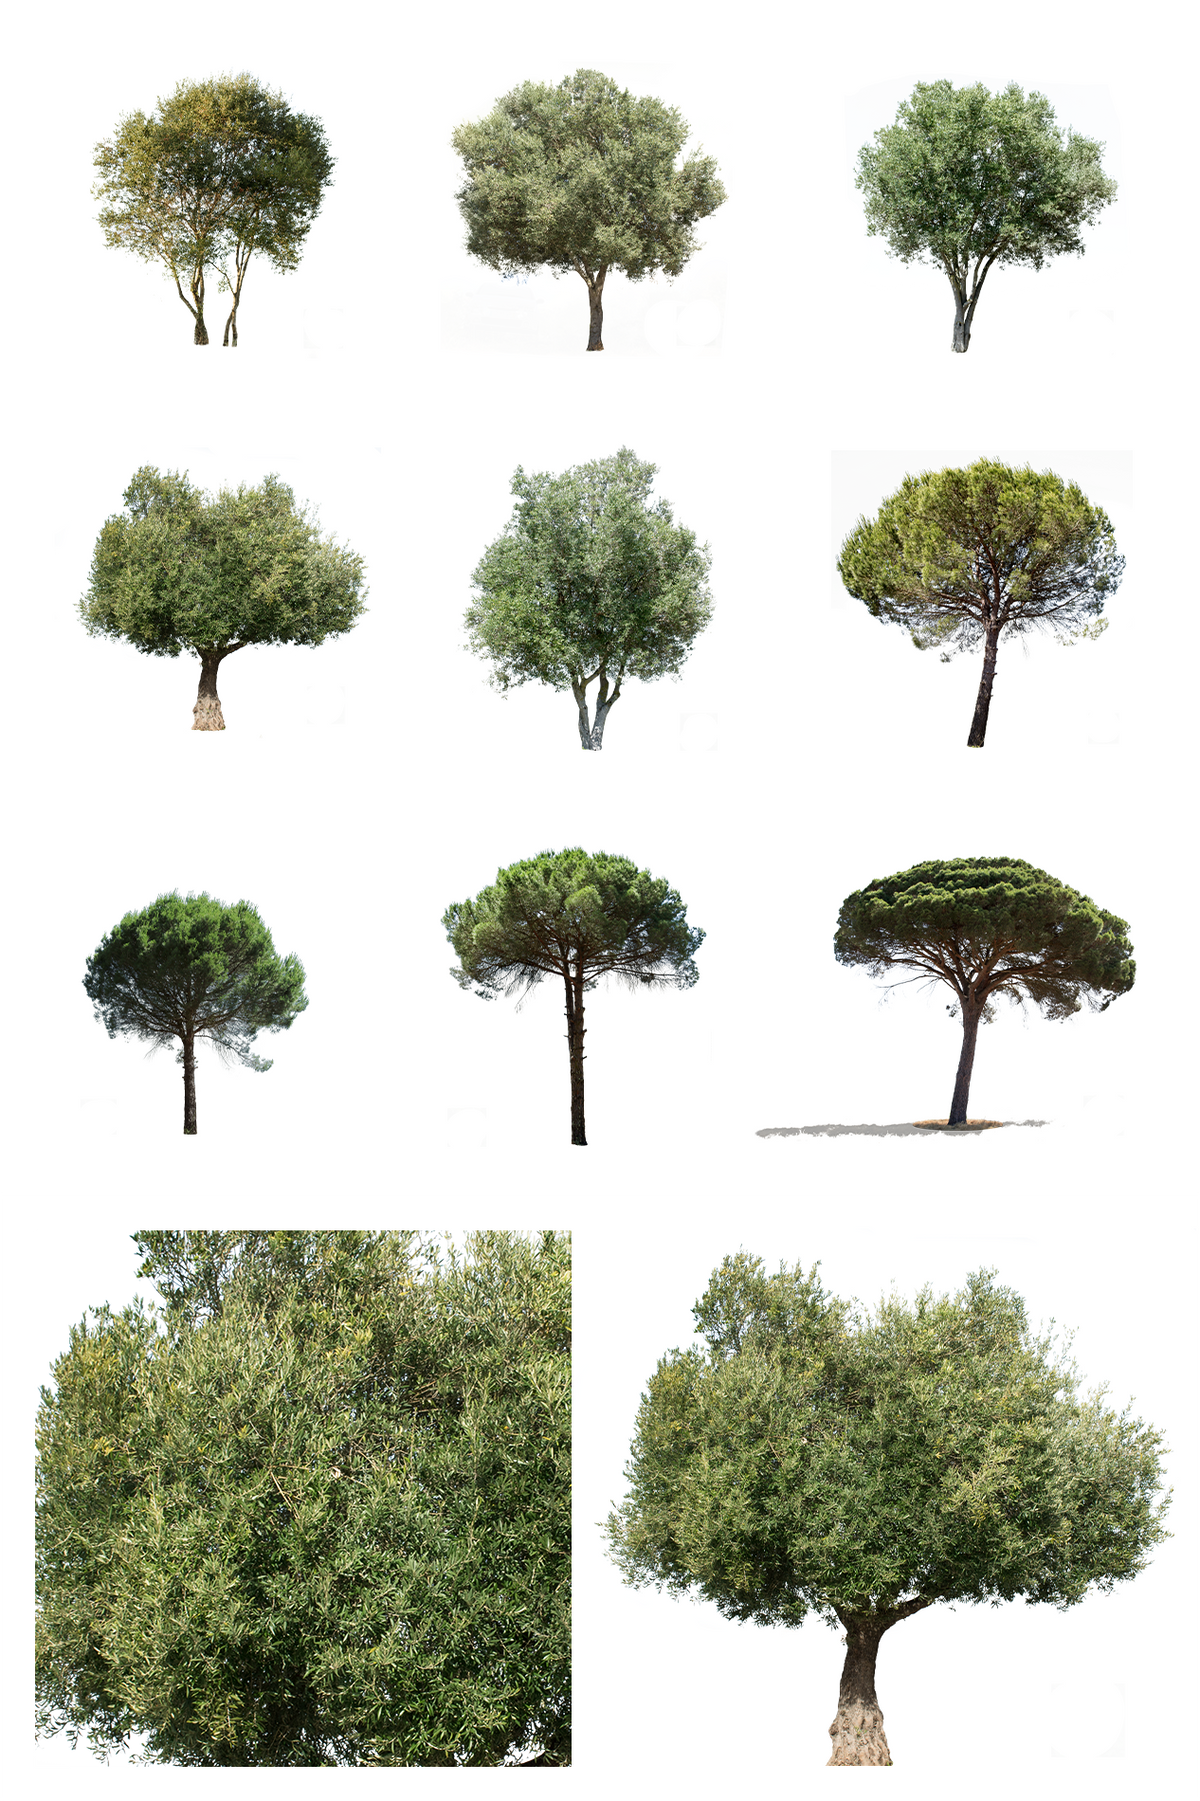 9 Mediterranean trees Pack 2 - cutout trees